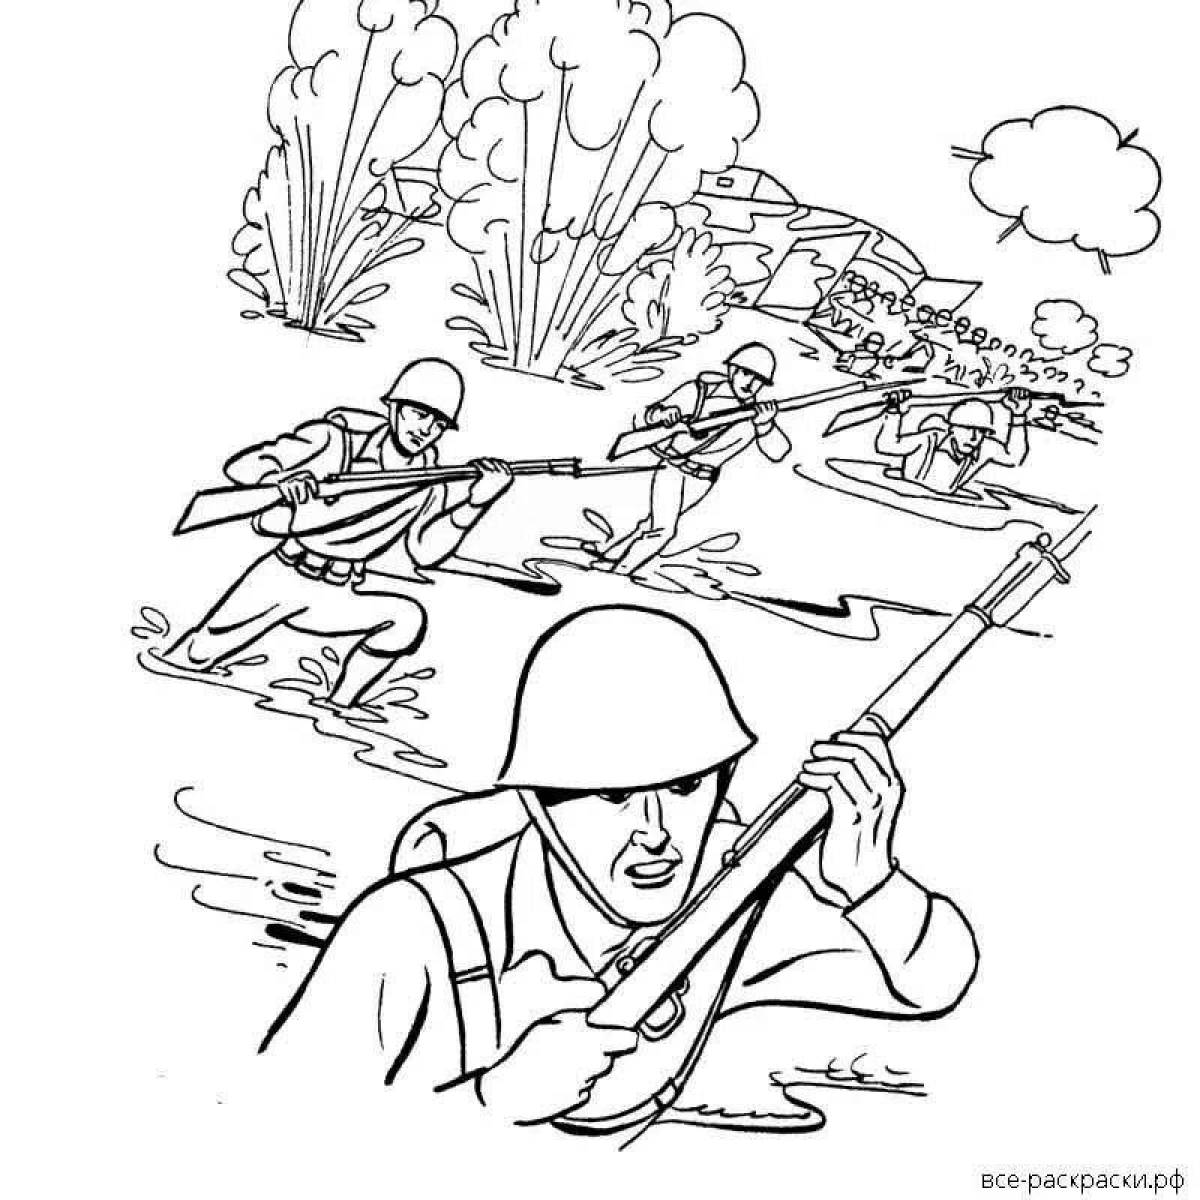 War drawing #9